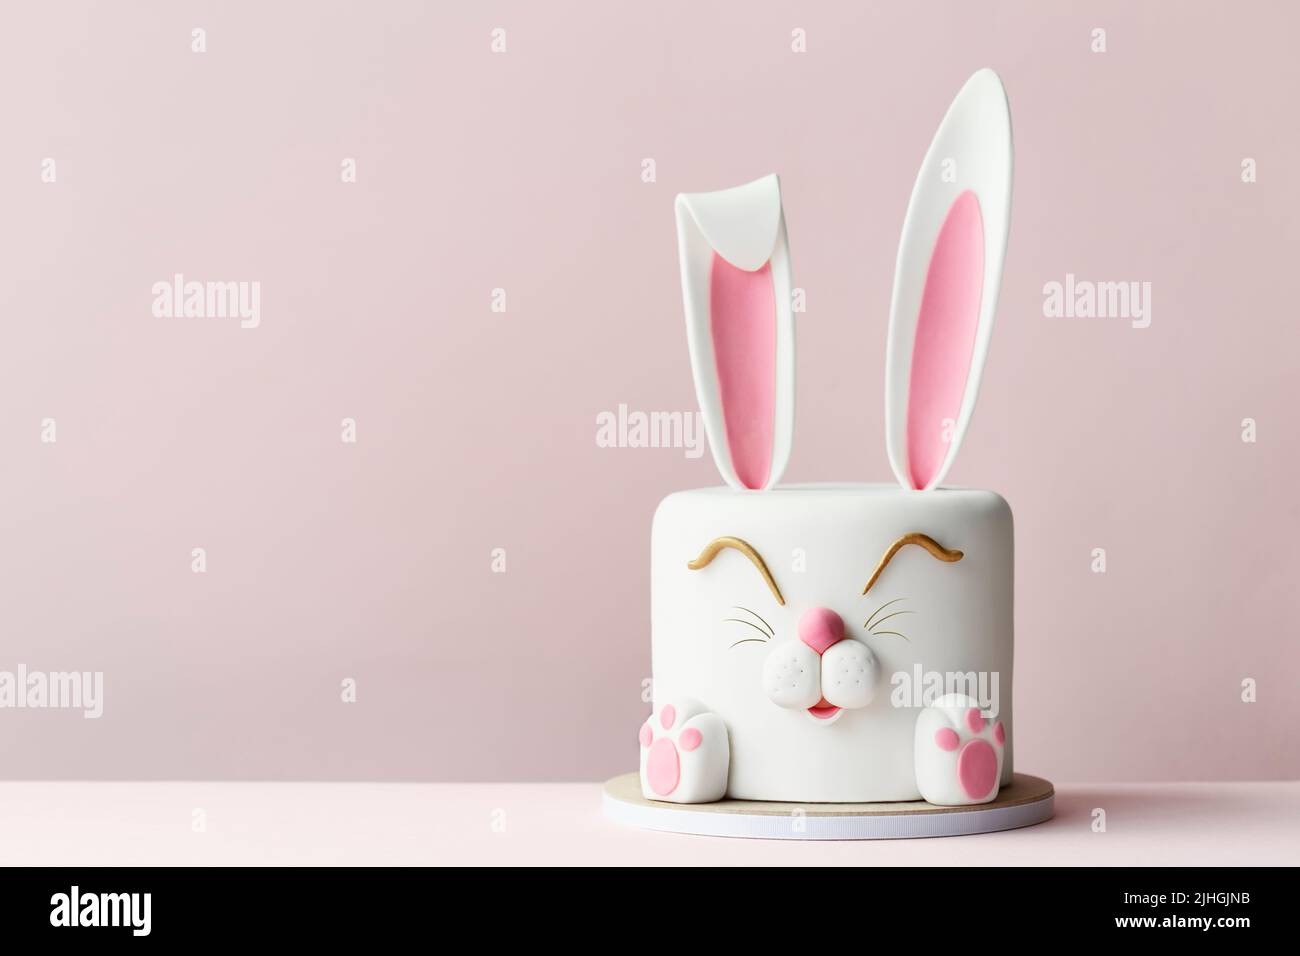 Easter bunny celebration cake on a pink background Stock Photo